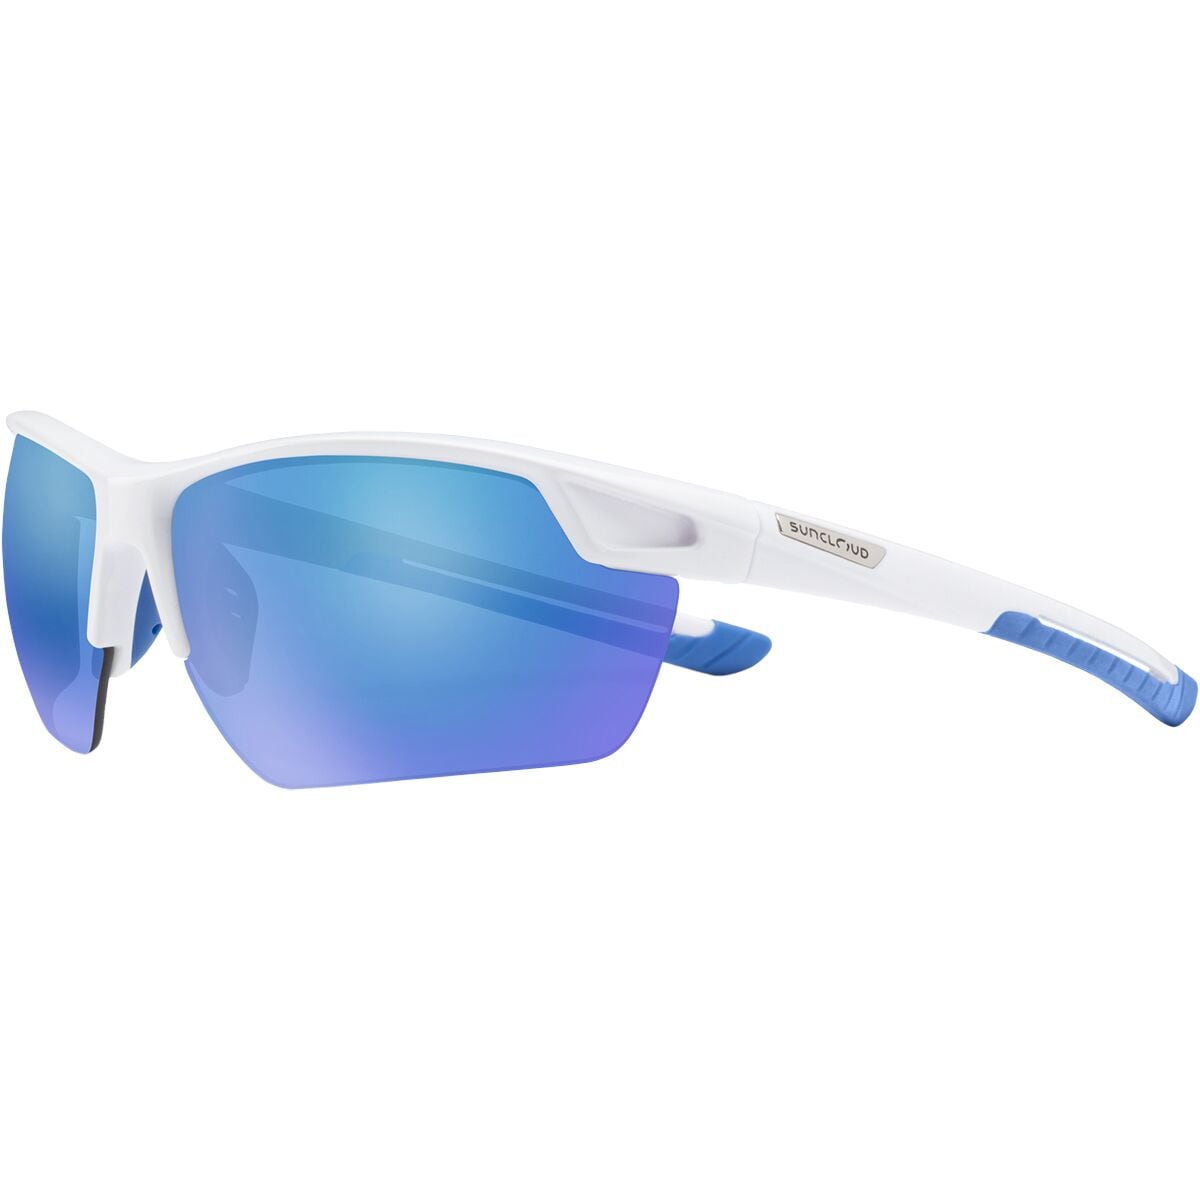 Поляризованные солнцезащитные очки contender Suncloud Polarized Optics, цвет white/polar blue2 mirror очки солнцезащитные stylemark polarized l2438f photochrome хамелеон